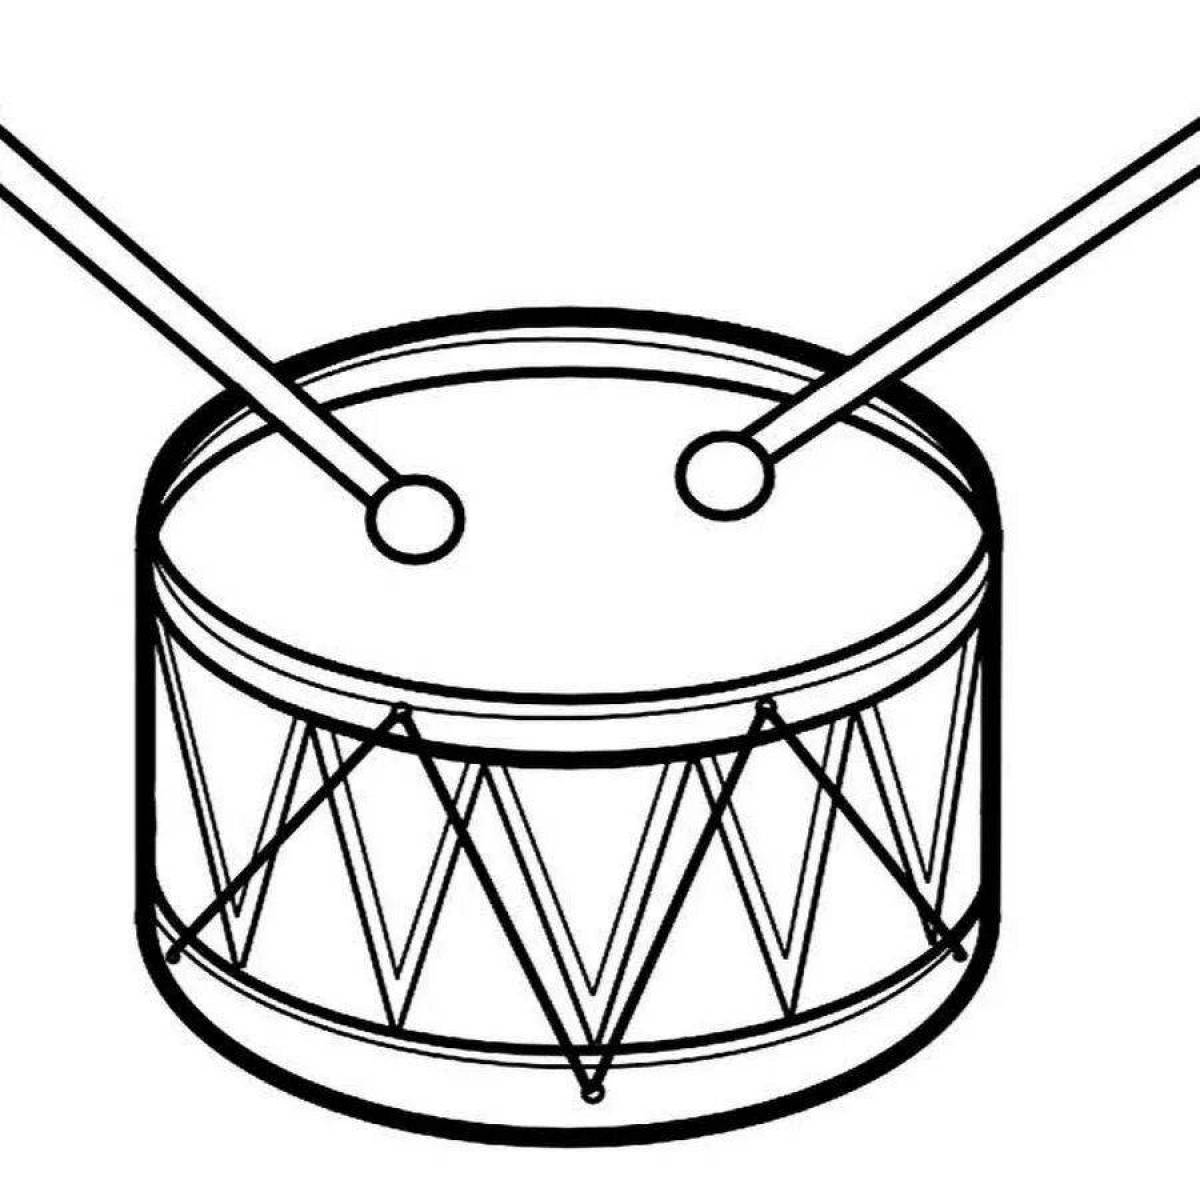 Coloring page joyful drum